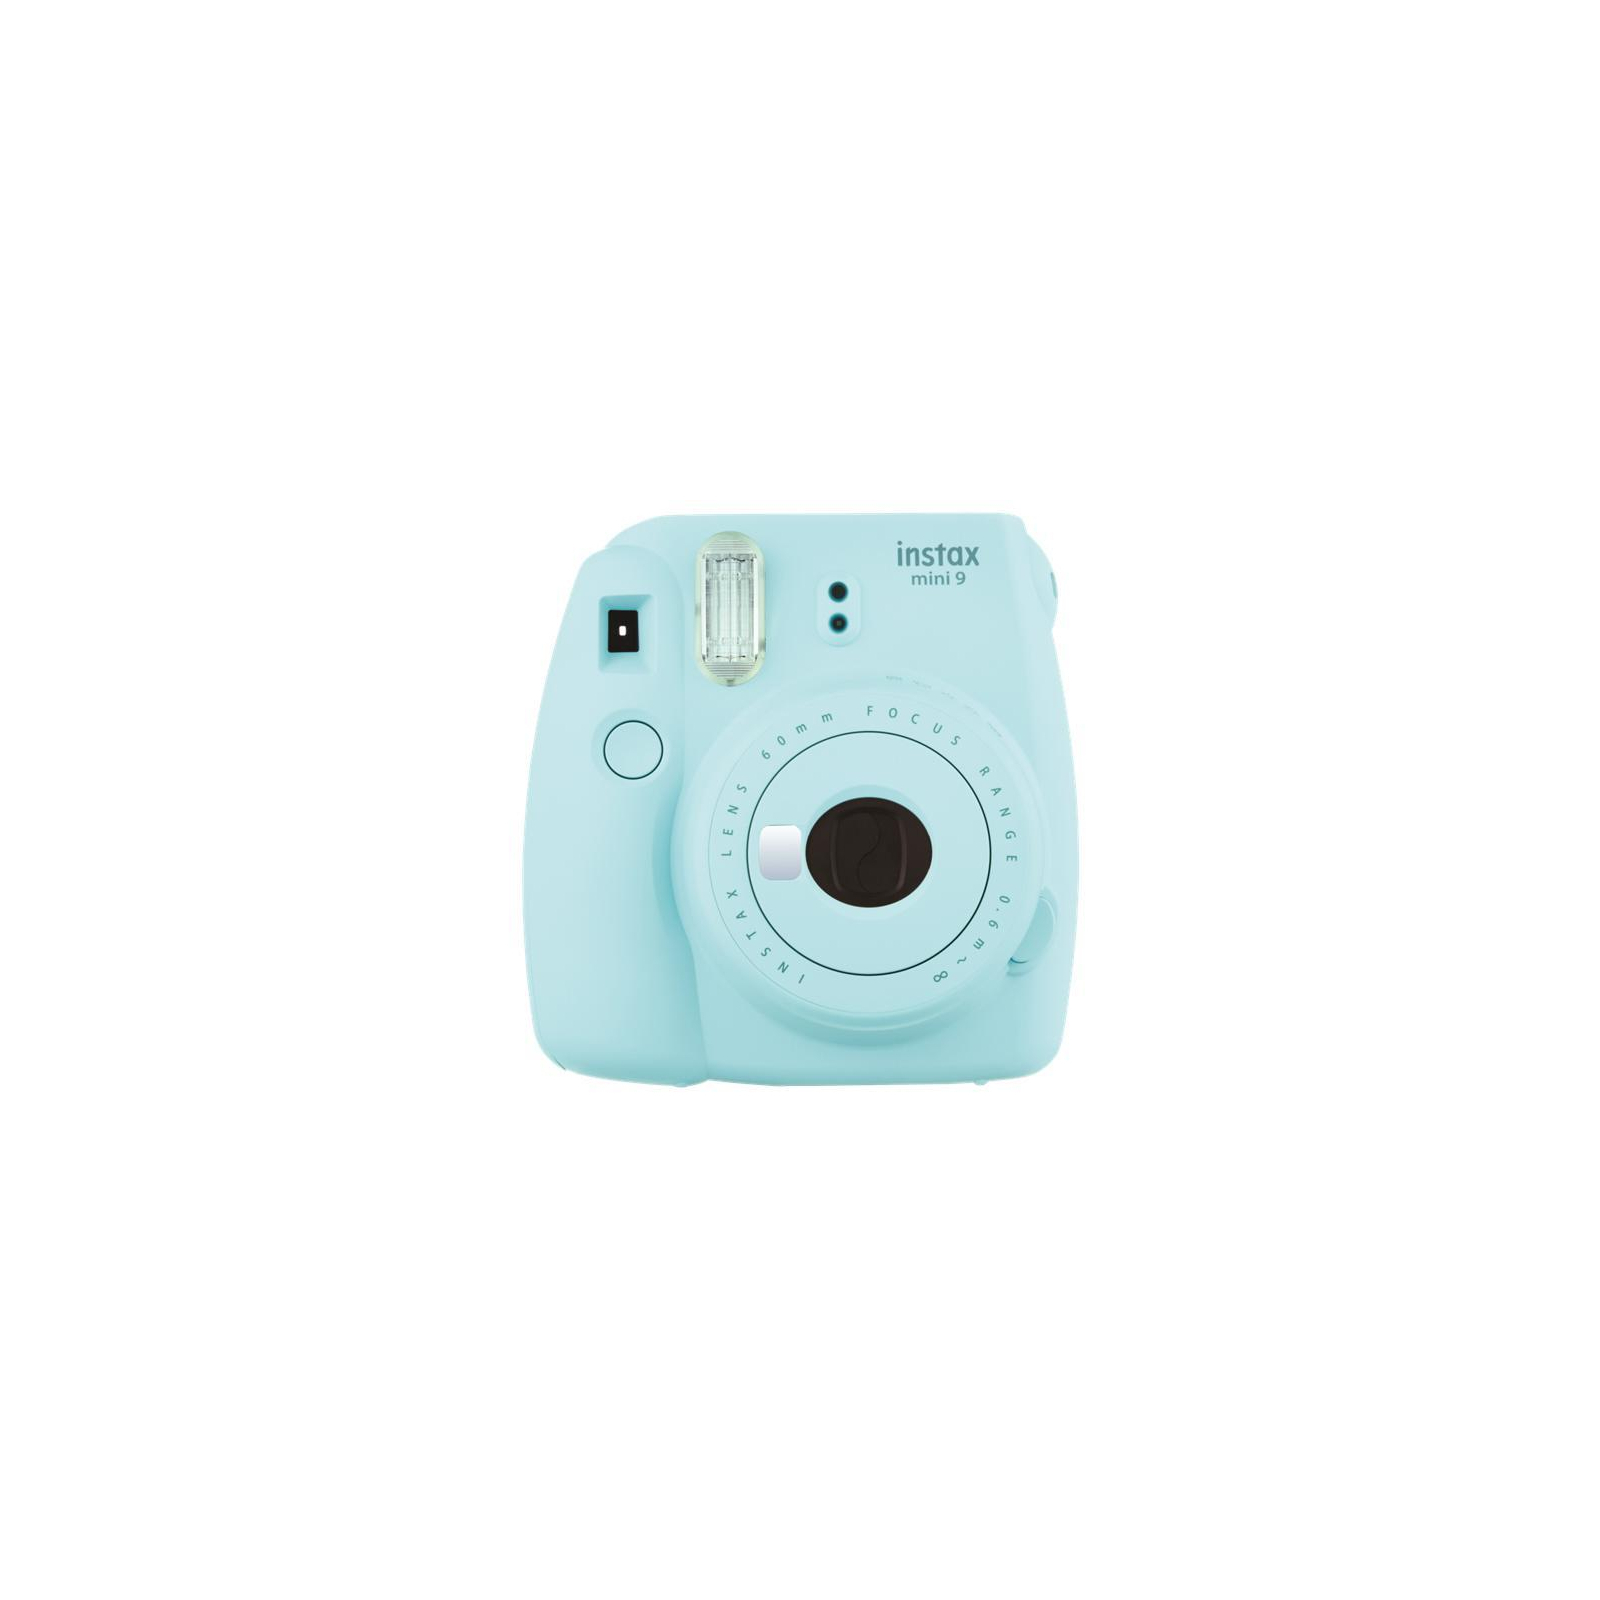 Камера моментальной печати Fujifilm Instax Mini 9 CAMERA SMO WHITE TH EX D (16550679) изображение 2